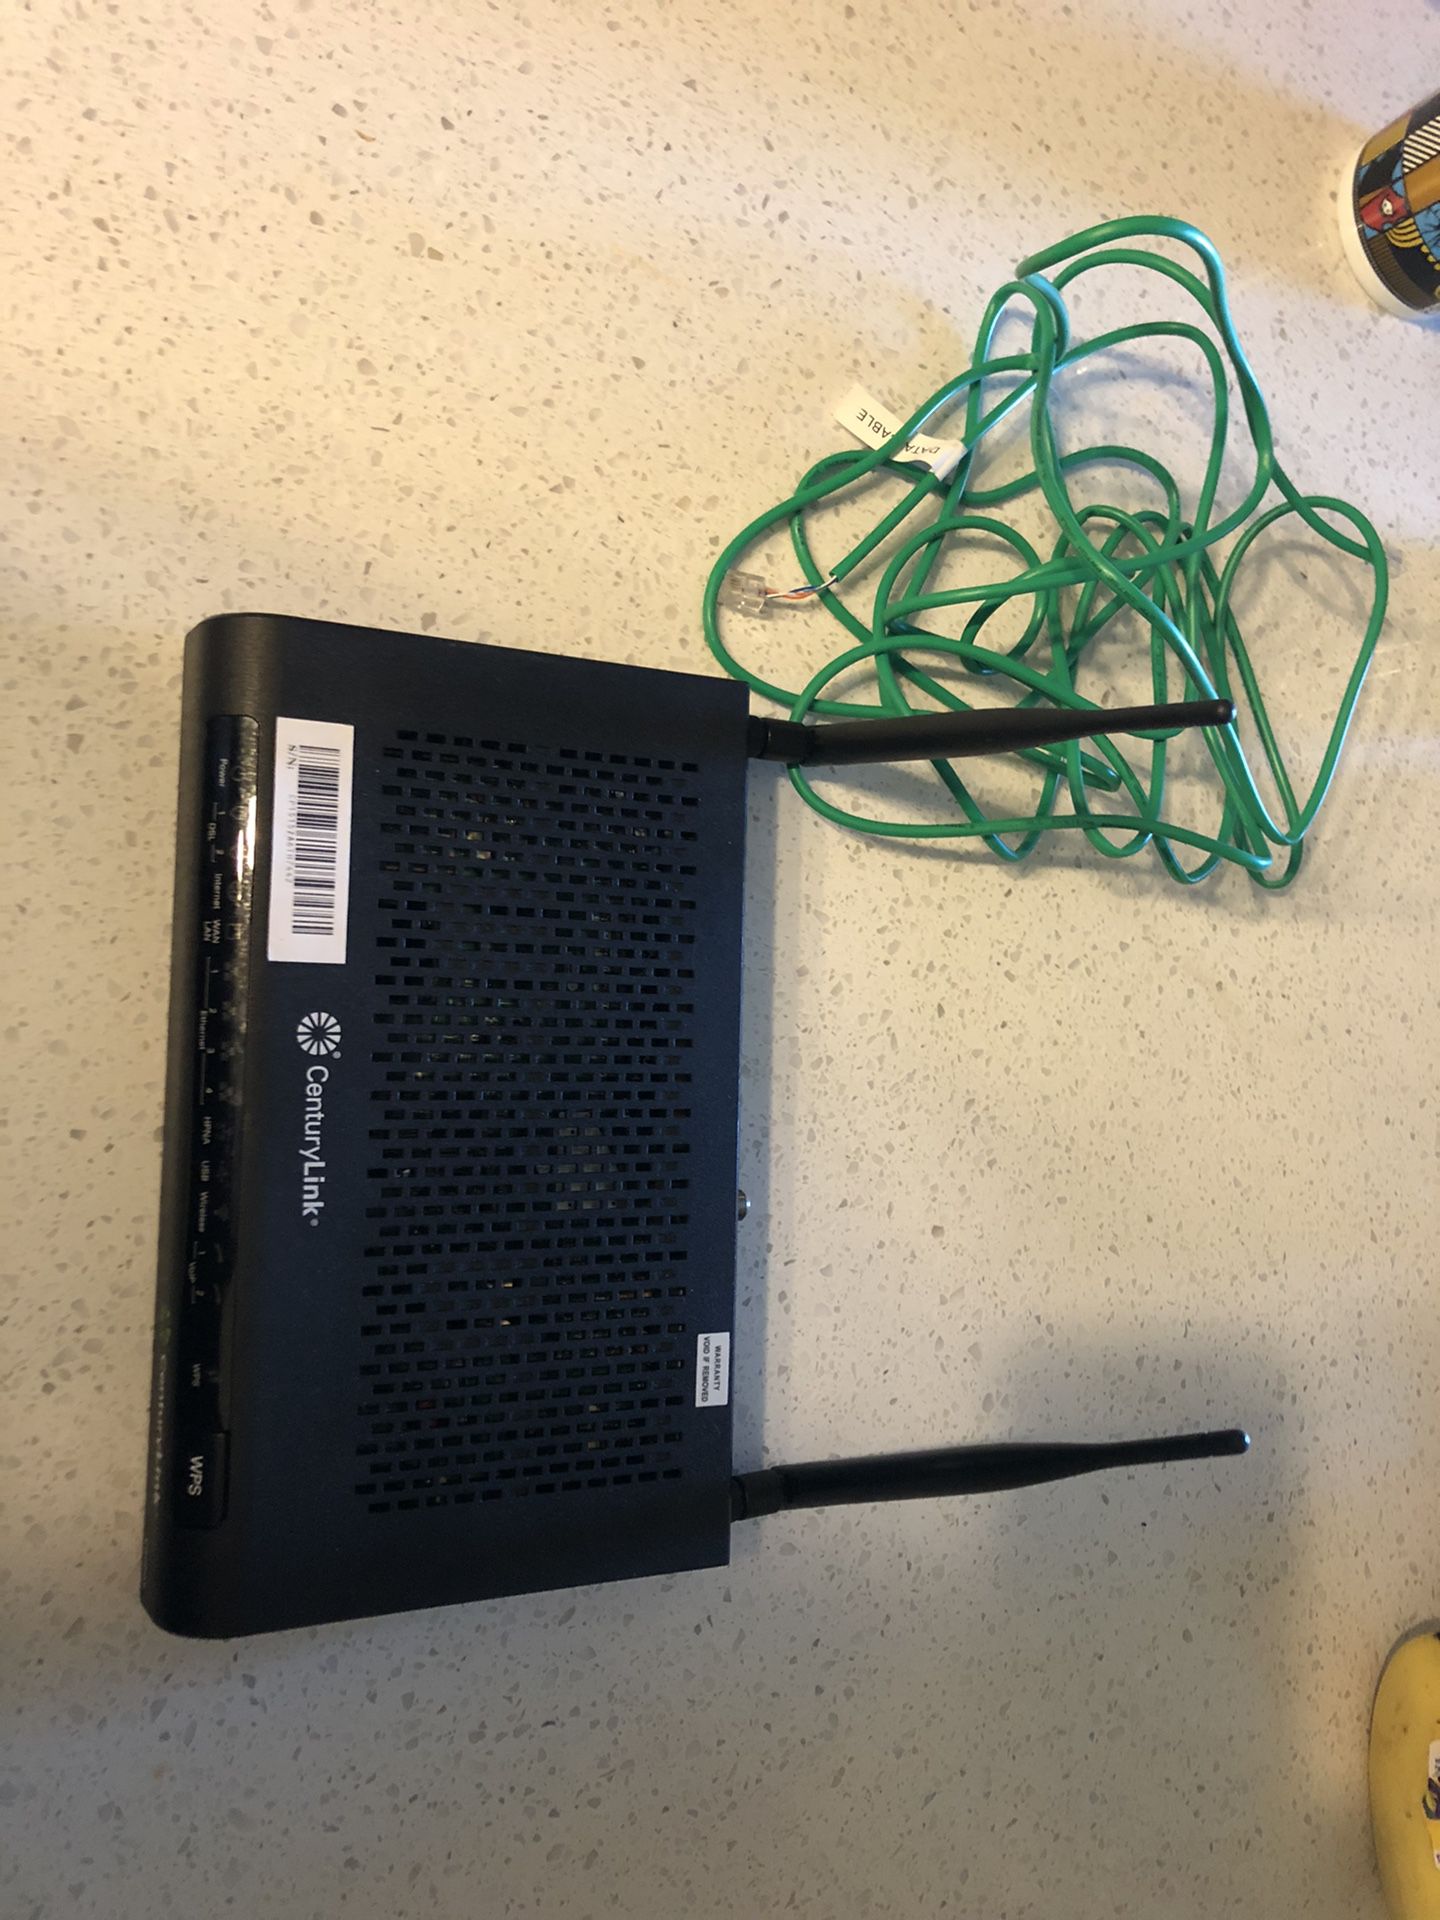 CenturyLink router/modem